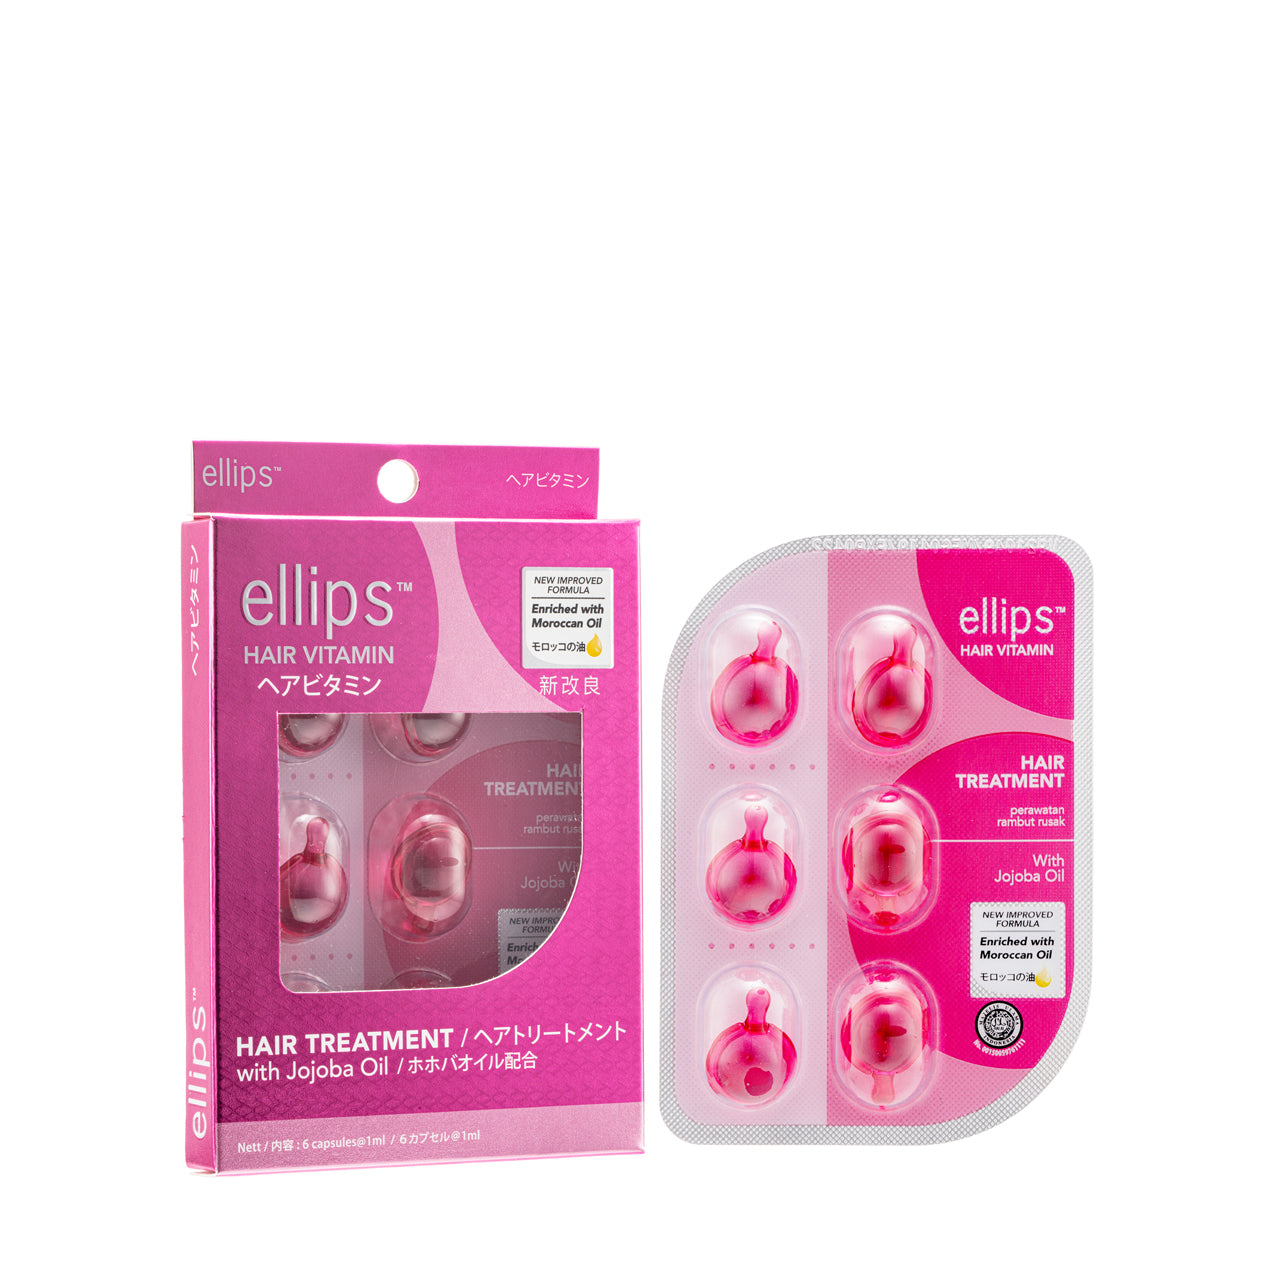 Ellips Hair Vitamin-Hair Treatment | Sasa Global eShop